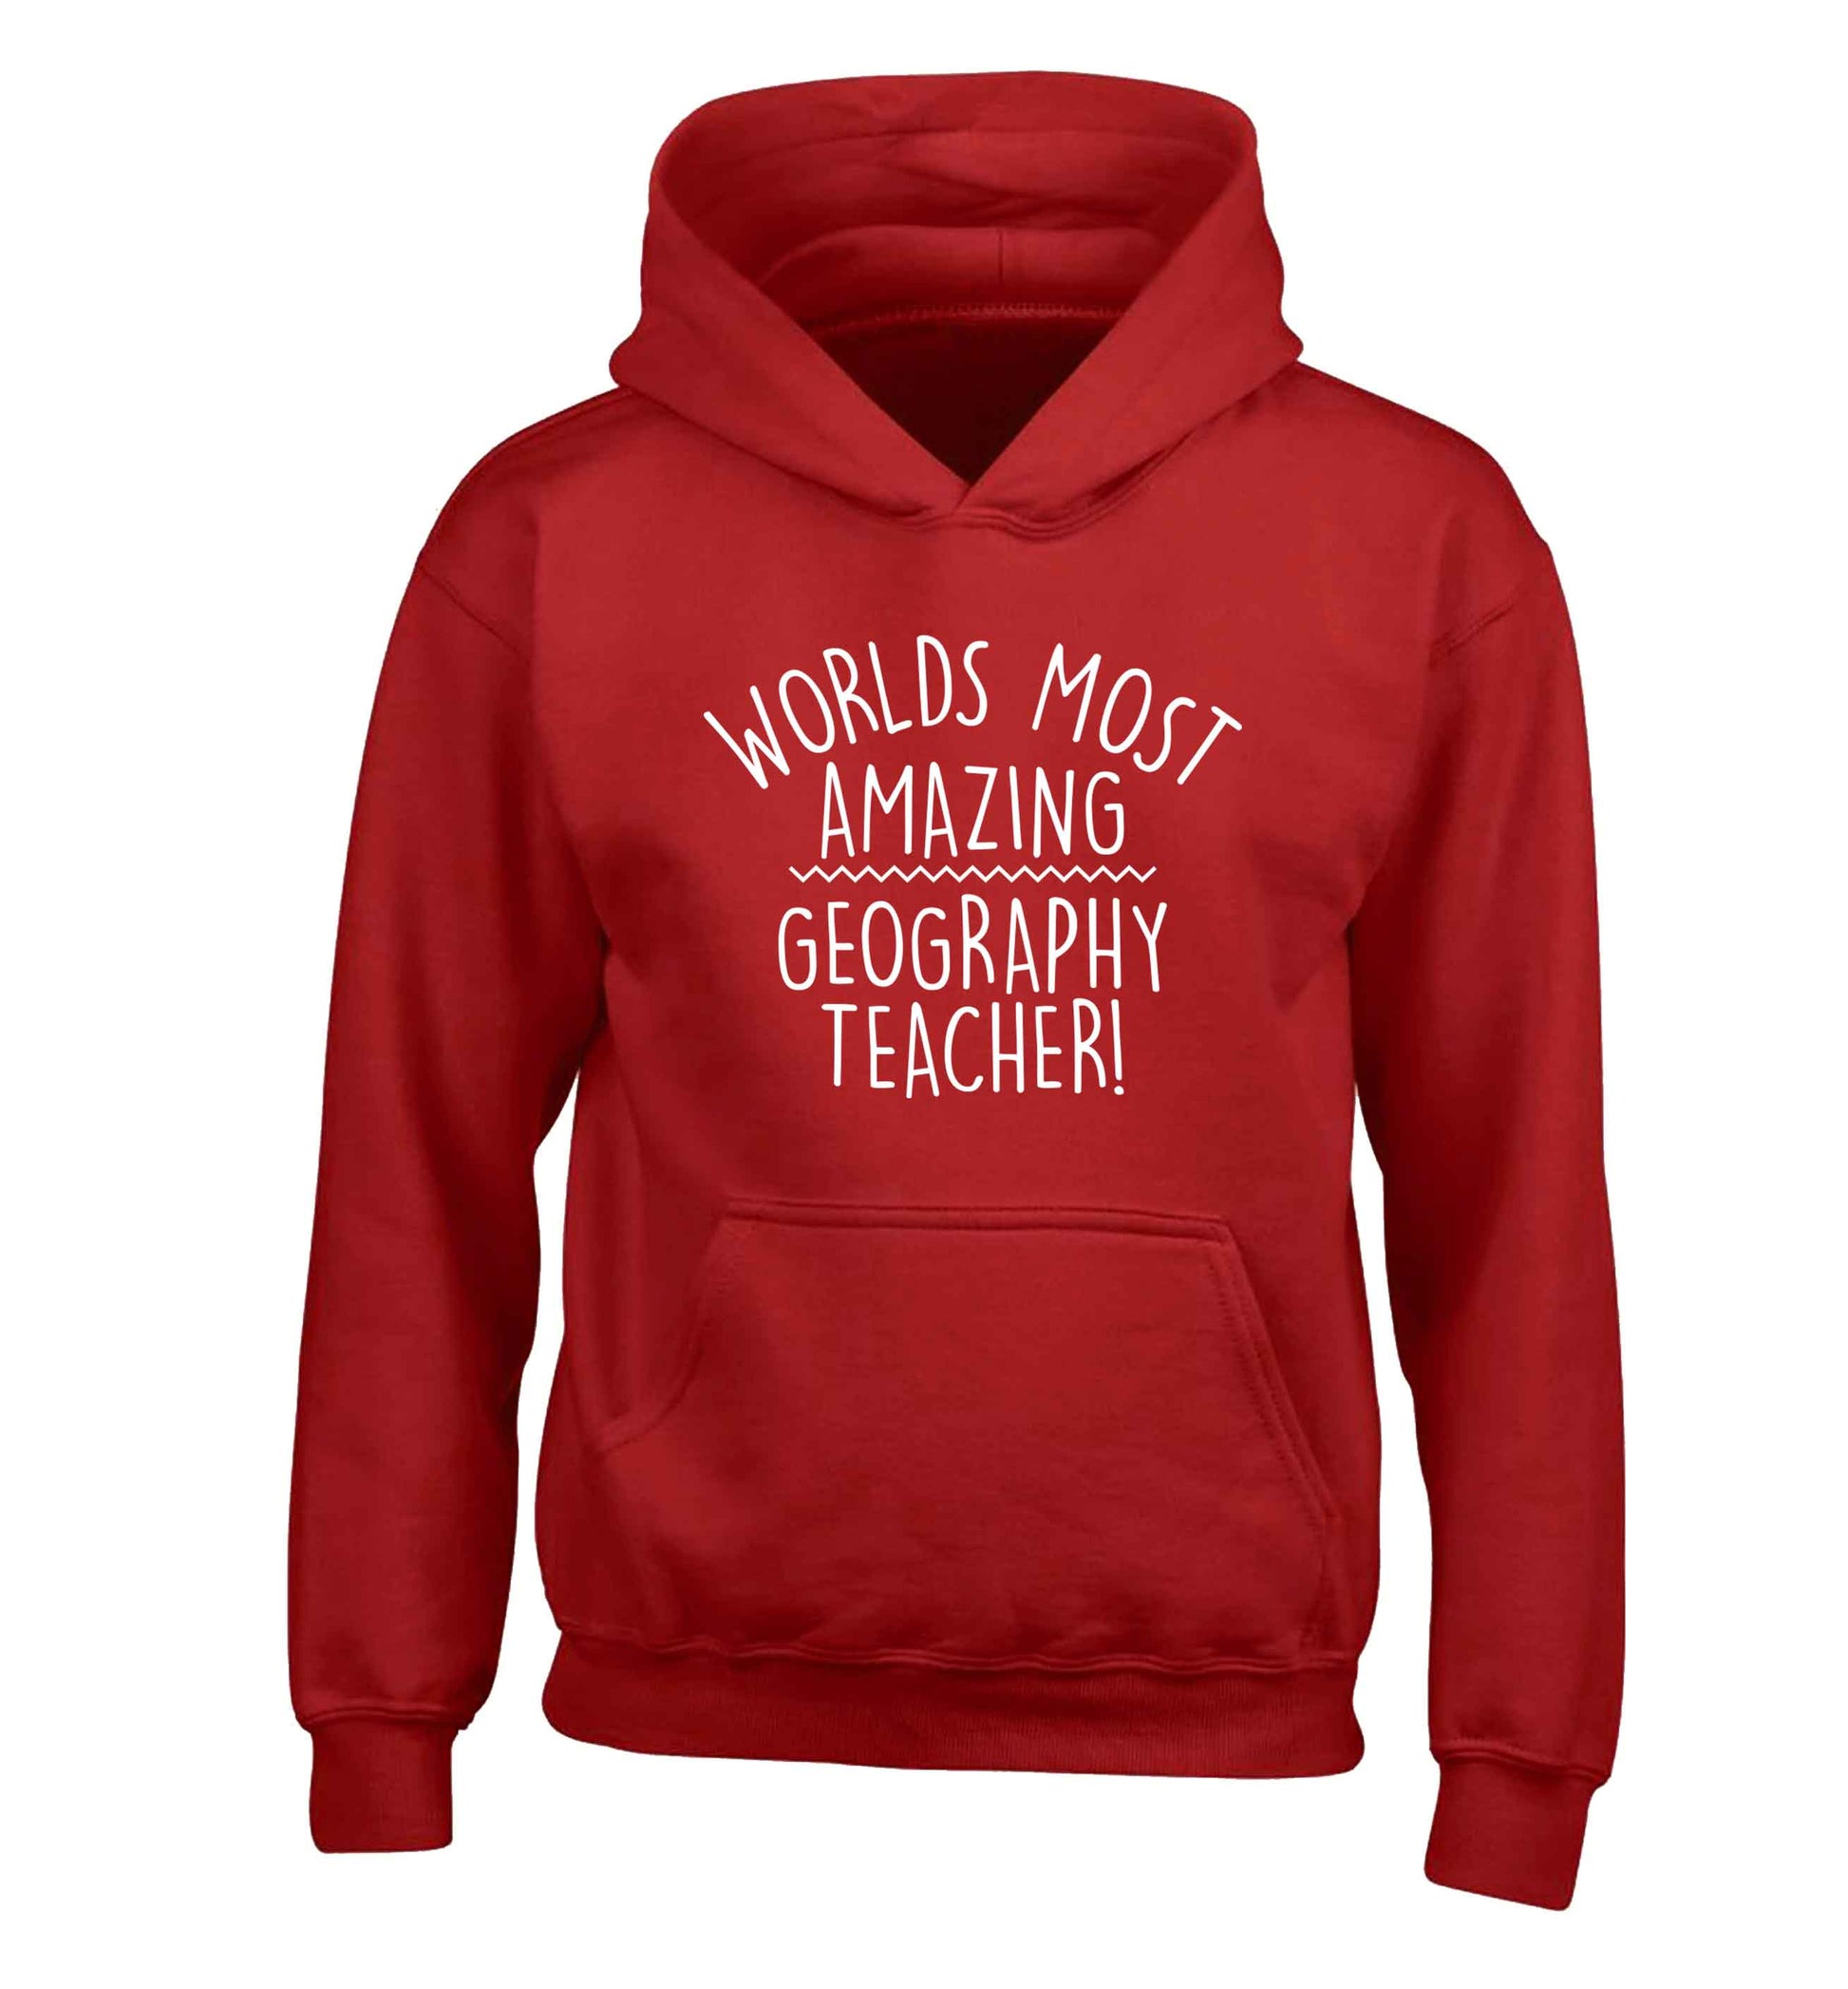 Worlds most amazing geography teacher children's red hoodie 12-13 Years